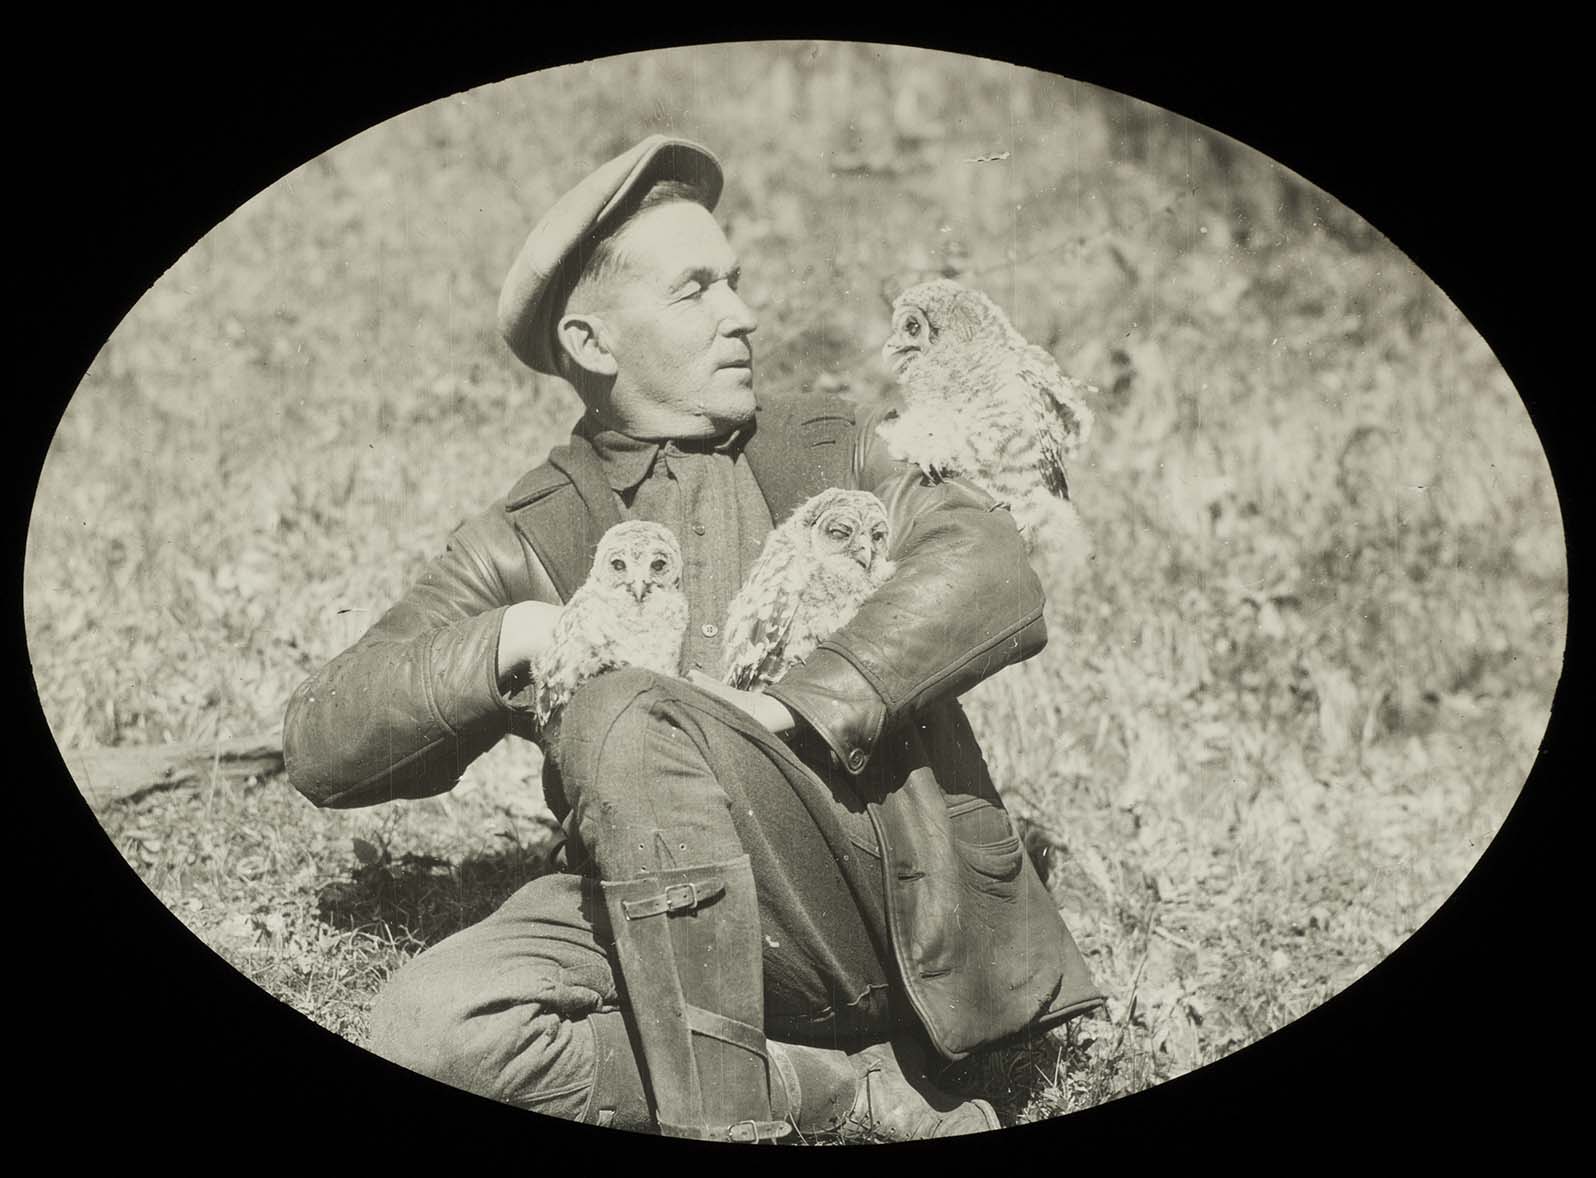 Lantern slide and photograph of Walter Rosene posing with owls